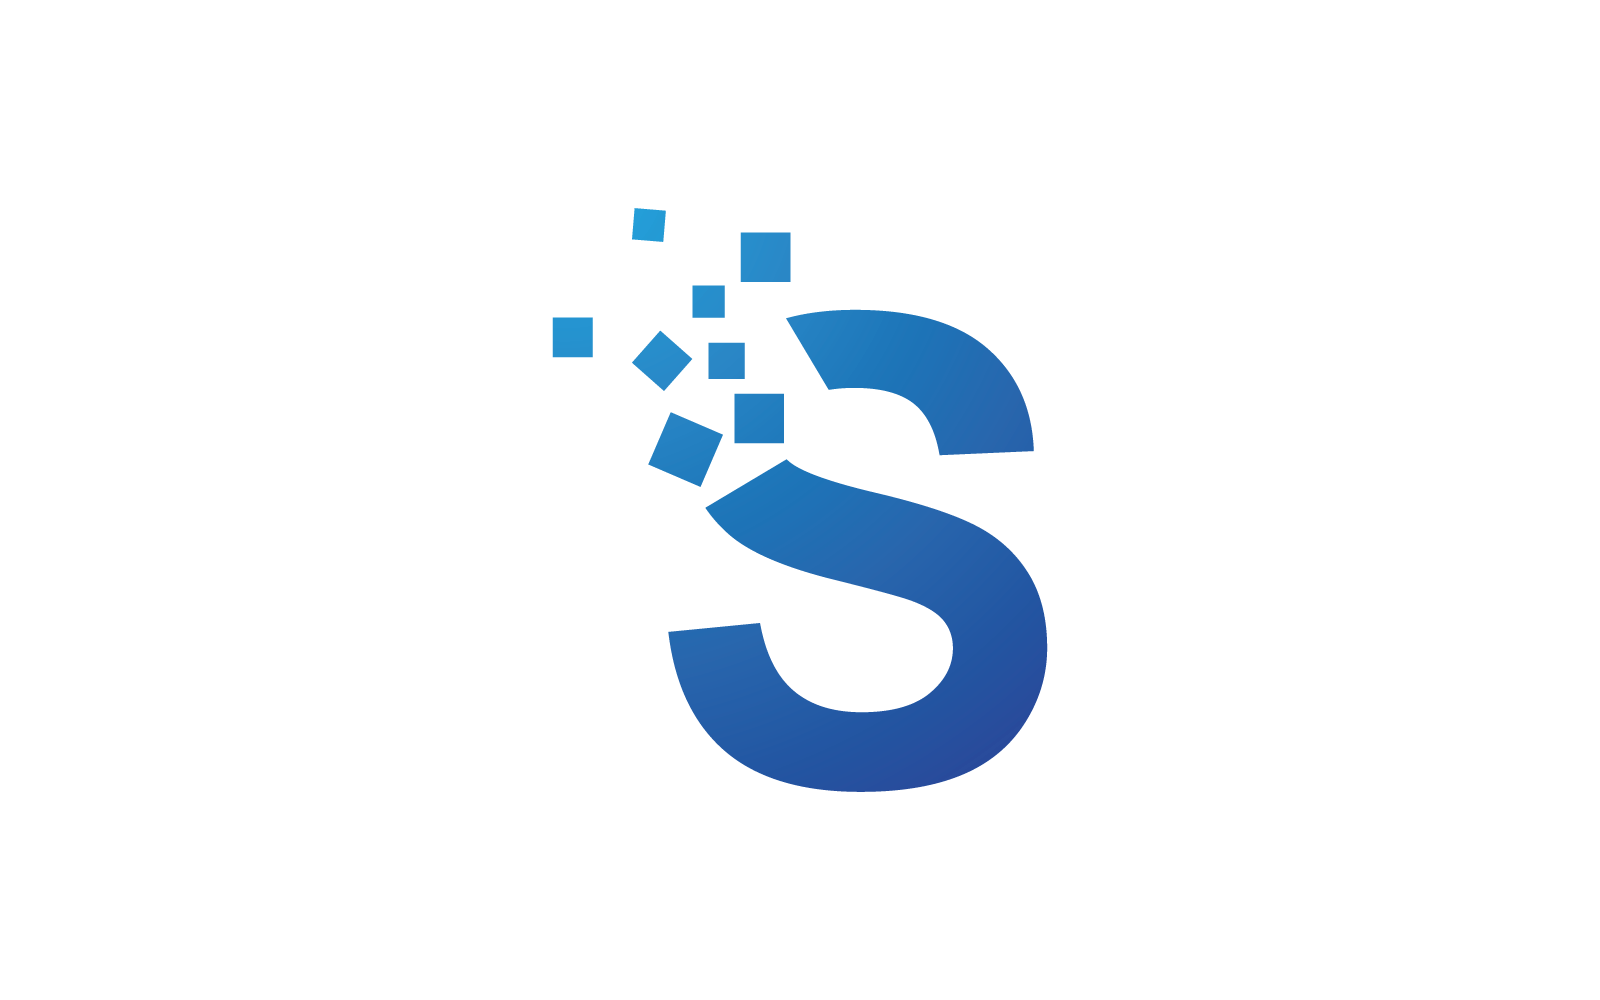 S Initial letter alphabet pixel style logo vector design